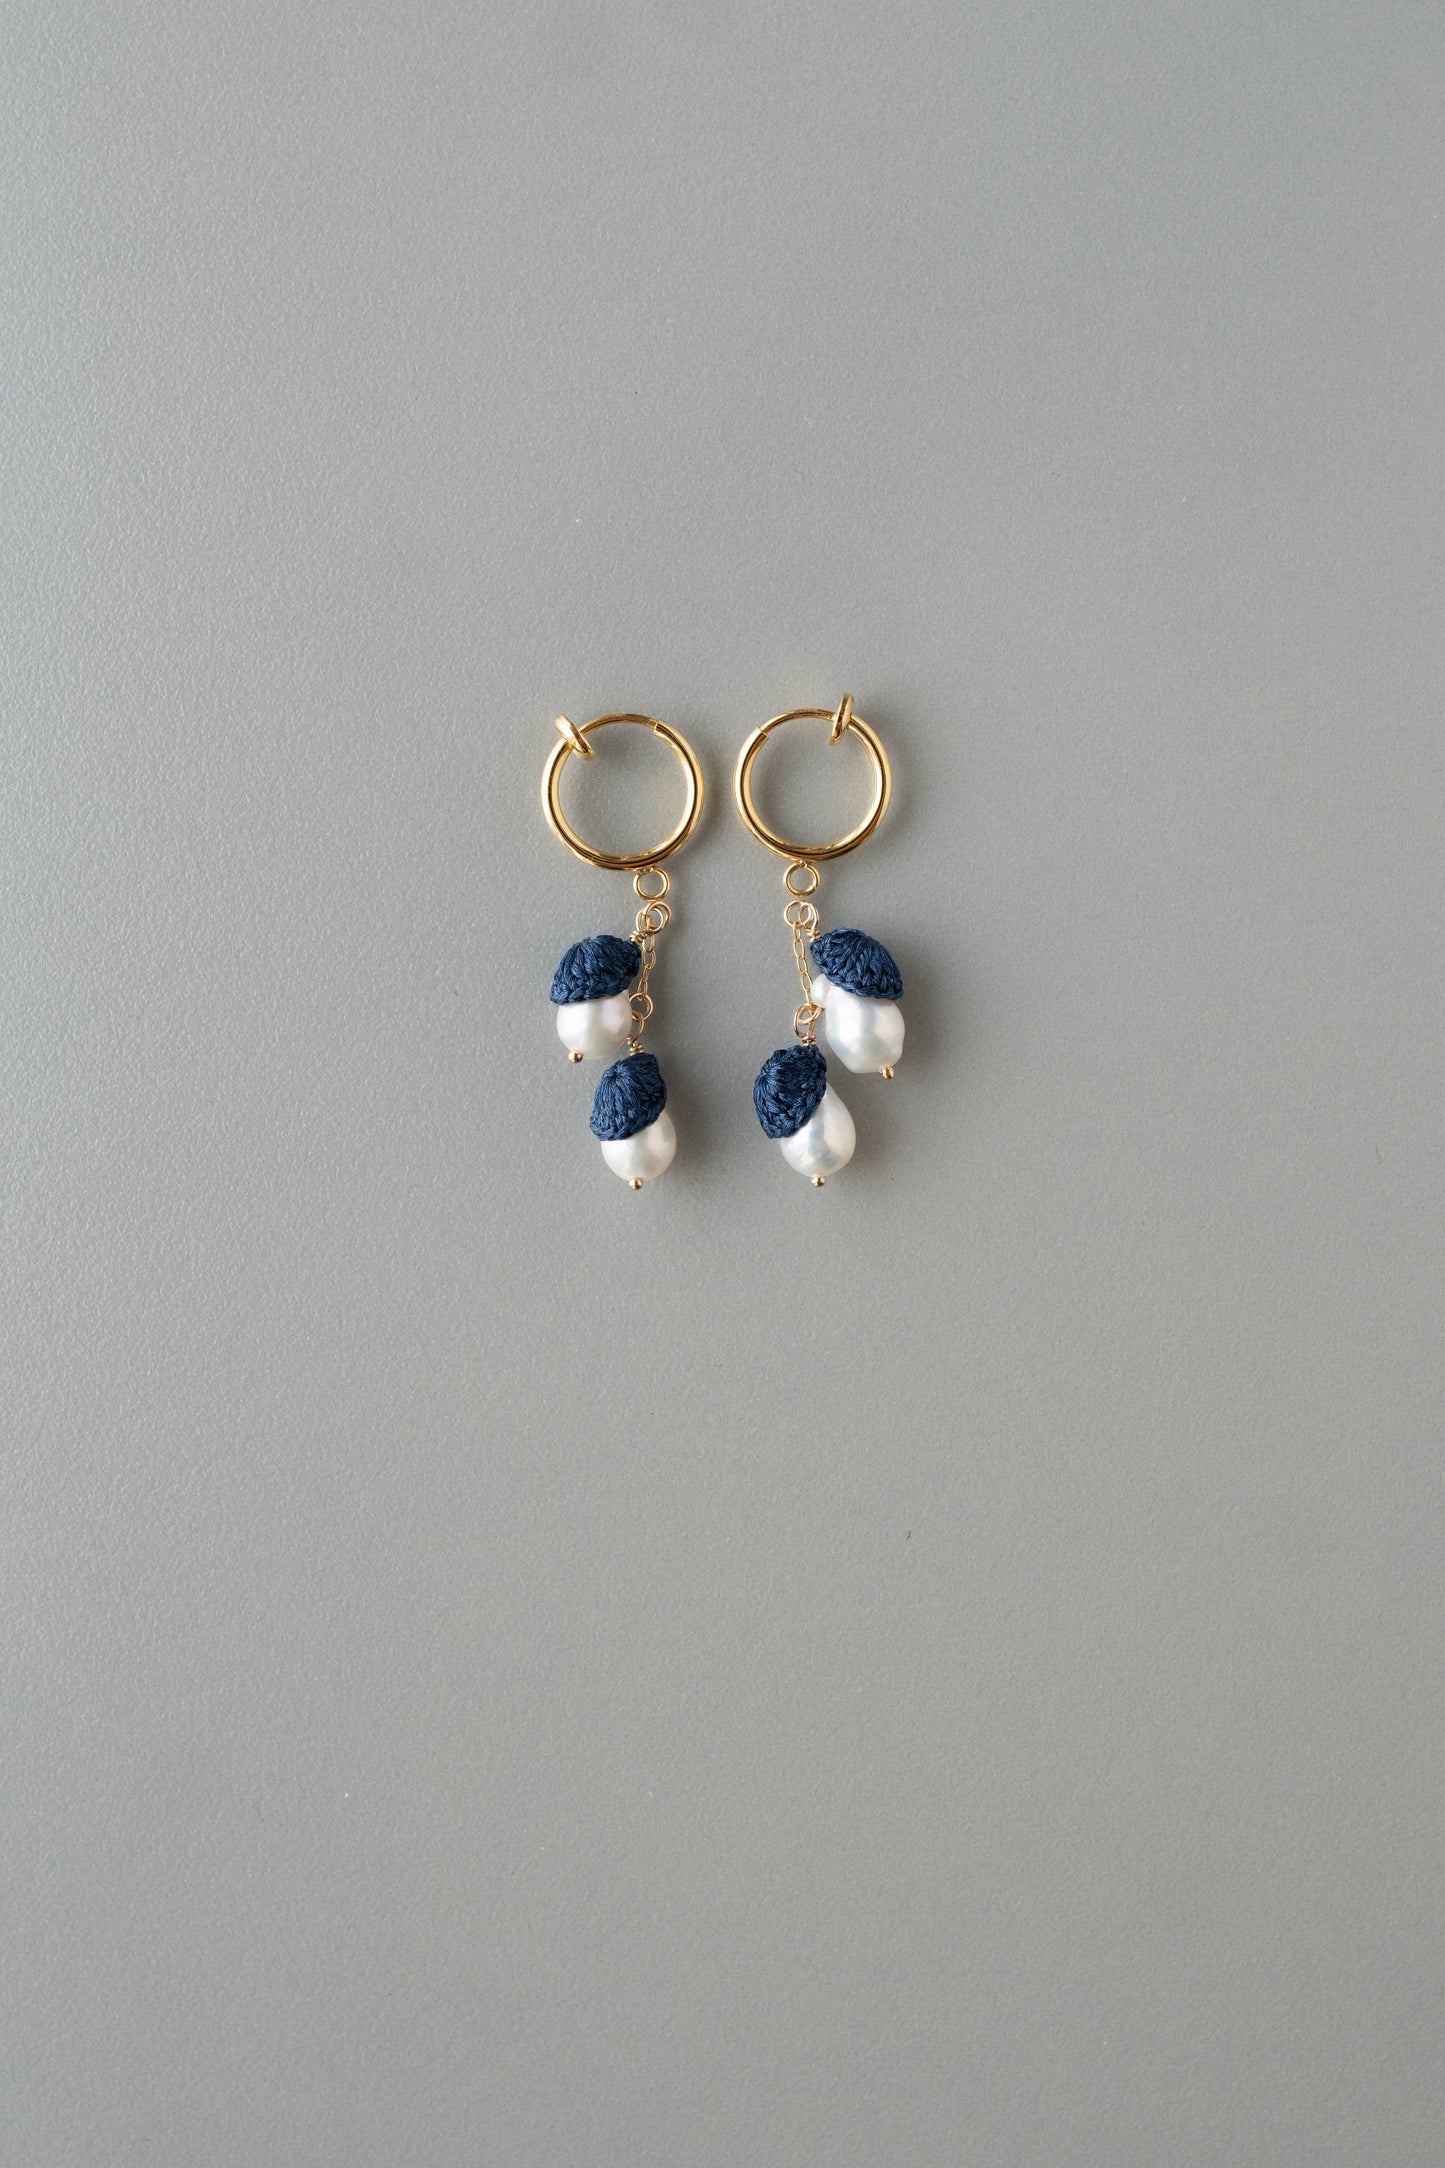 Cuddle pearl earrings | Indigo